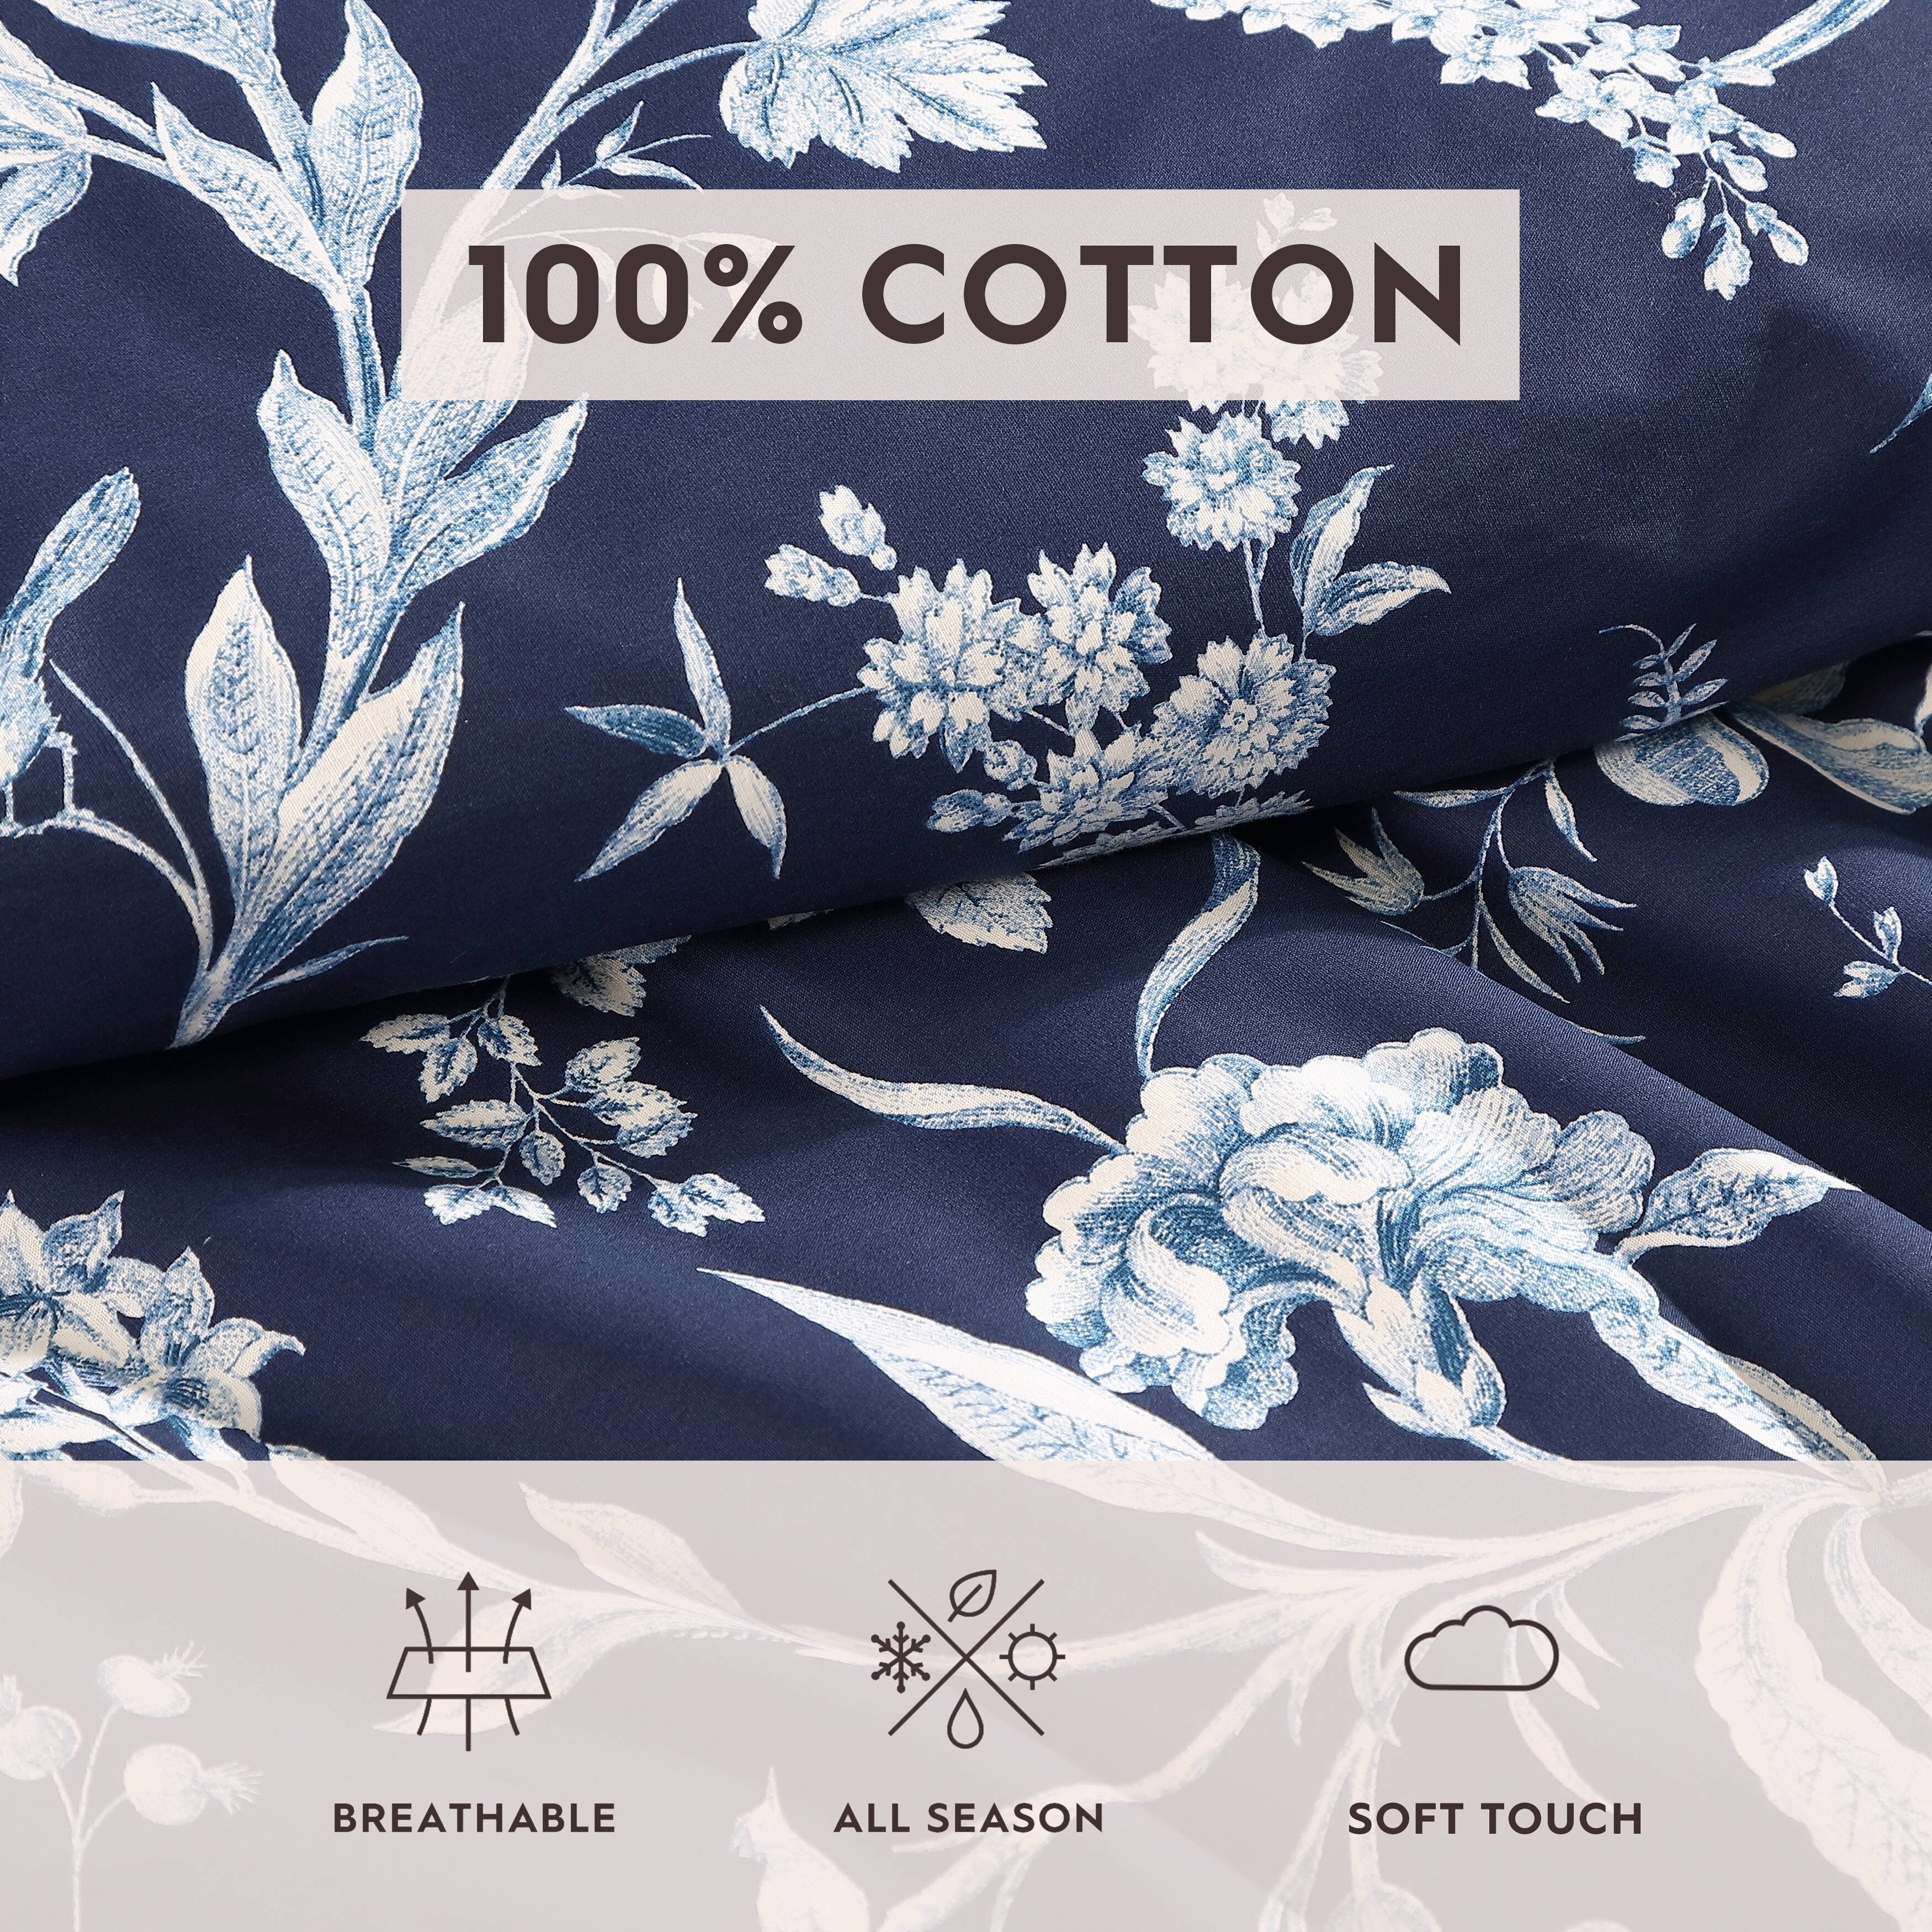 Branch Toile Blue Comforter Bonus Set